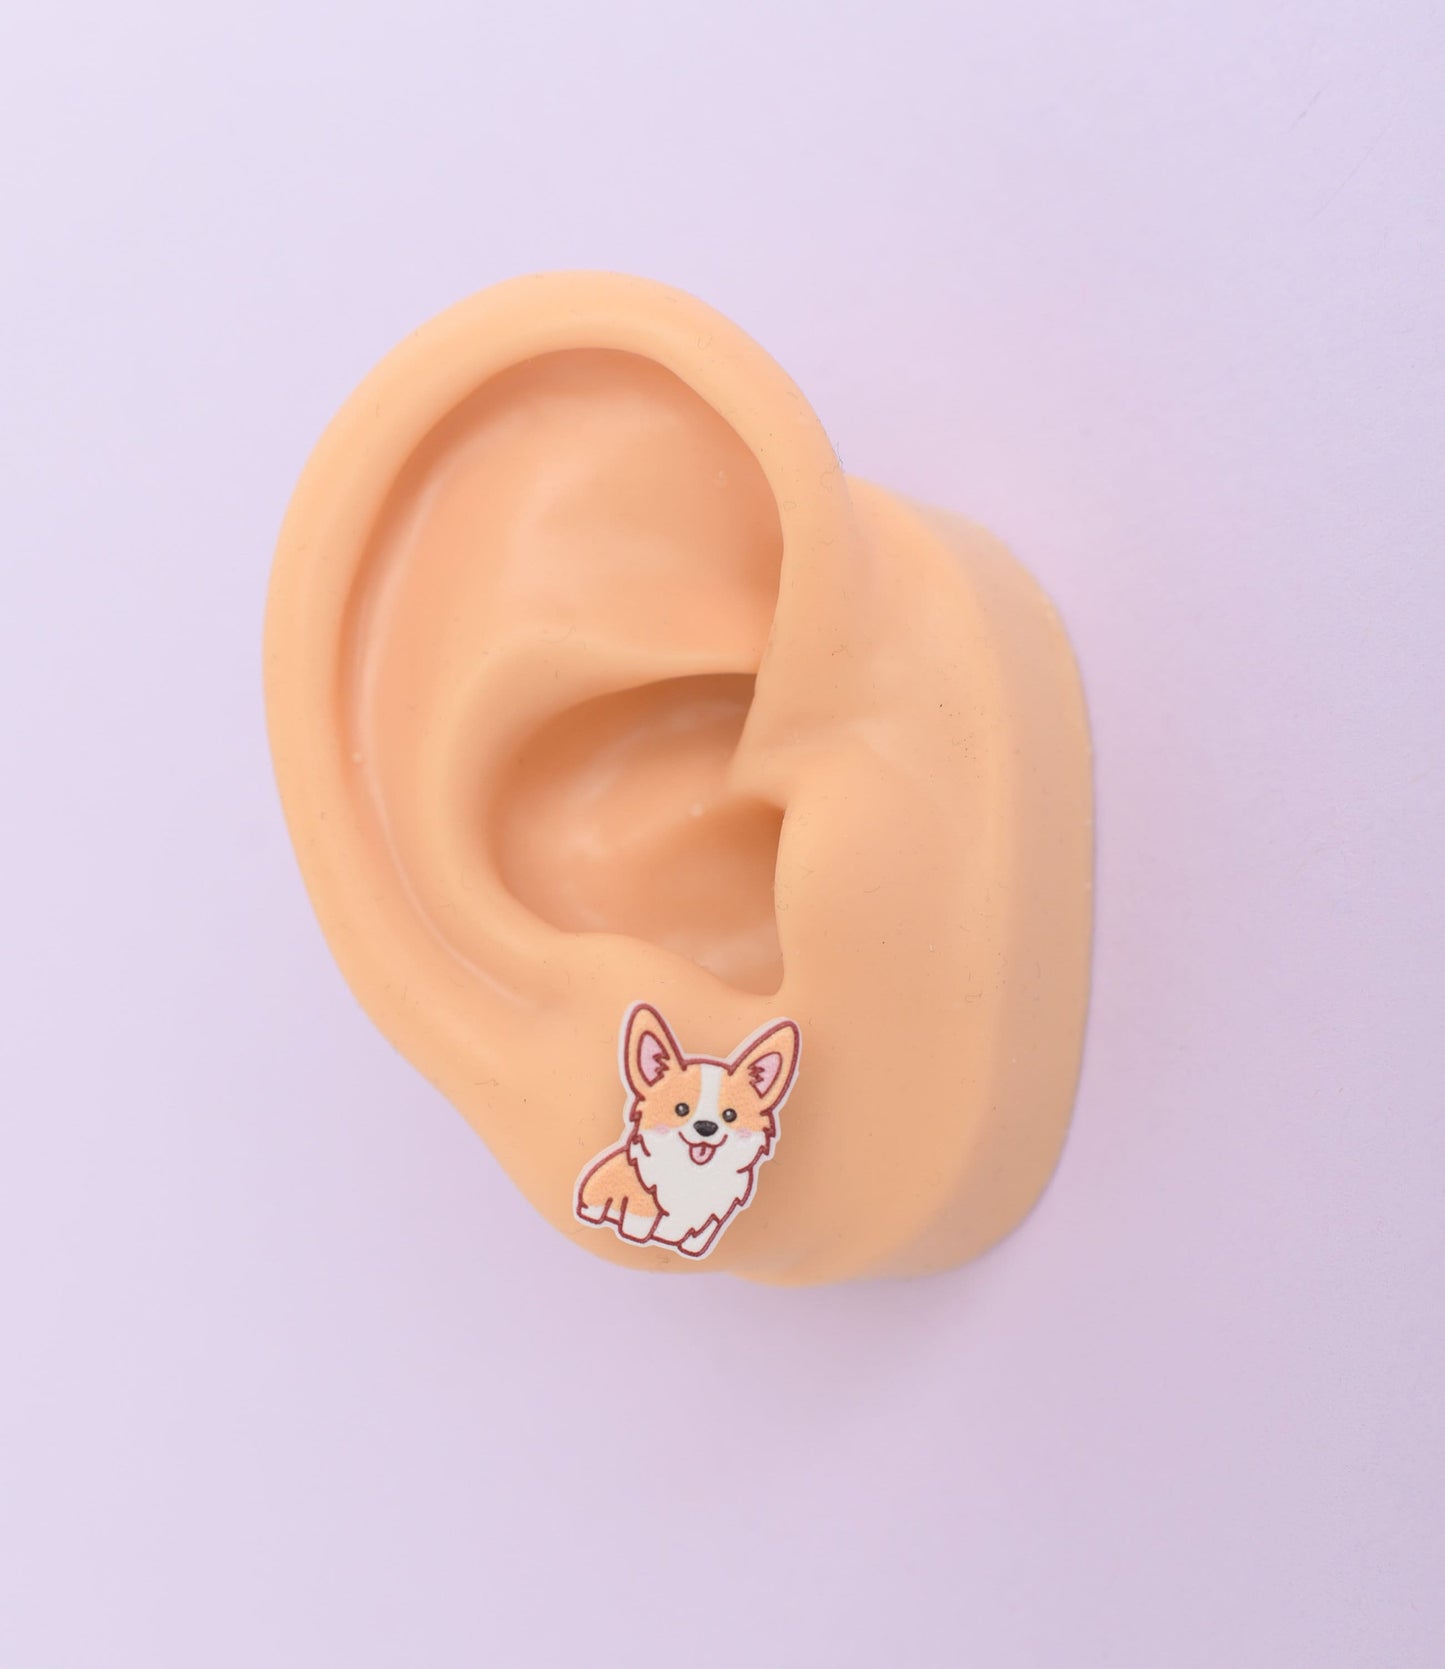 Acrylic Corgi Dog Earrings with Titanium Posts